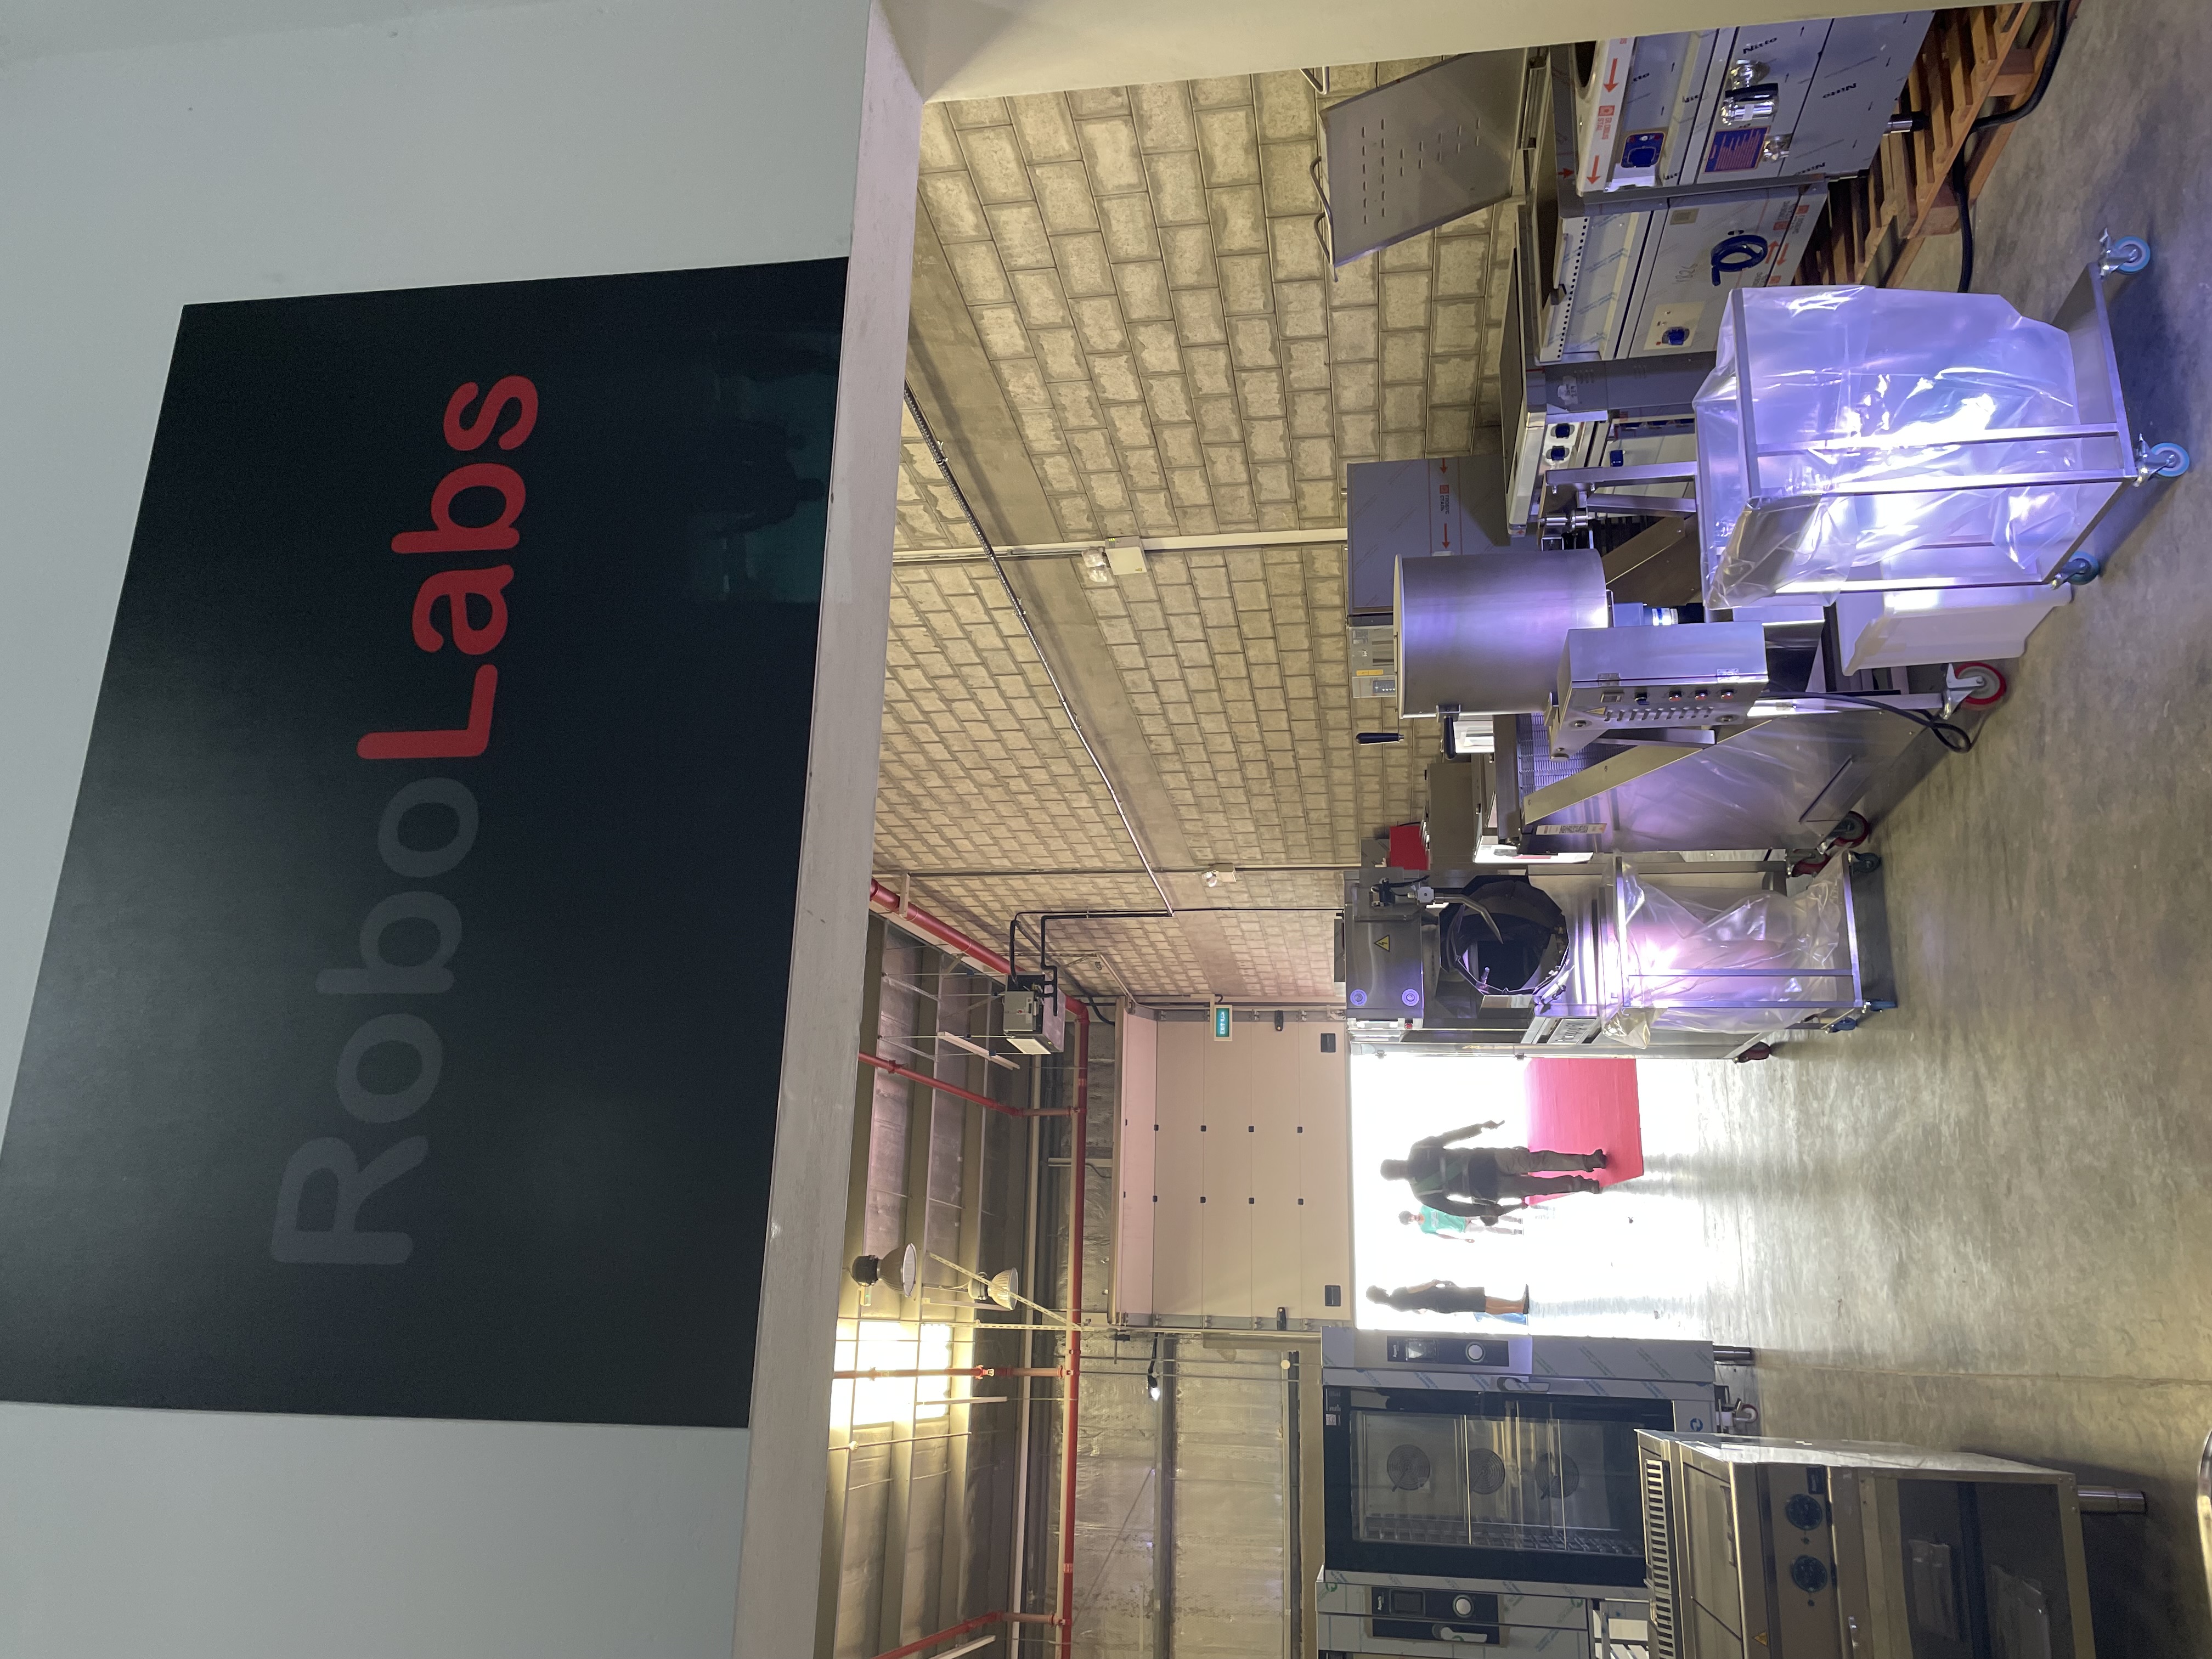 New RoboLabs Showroom in UAE, DUBAI is open